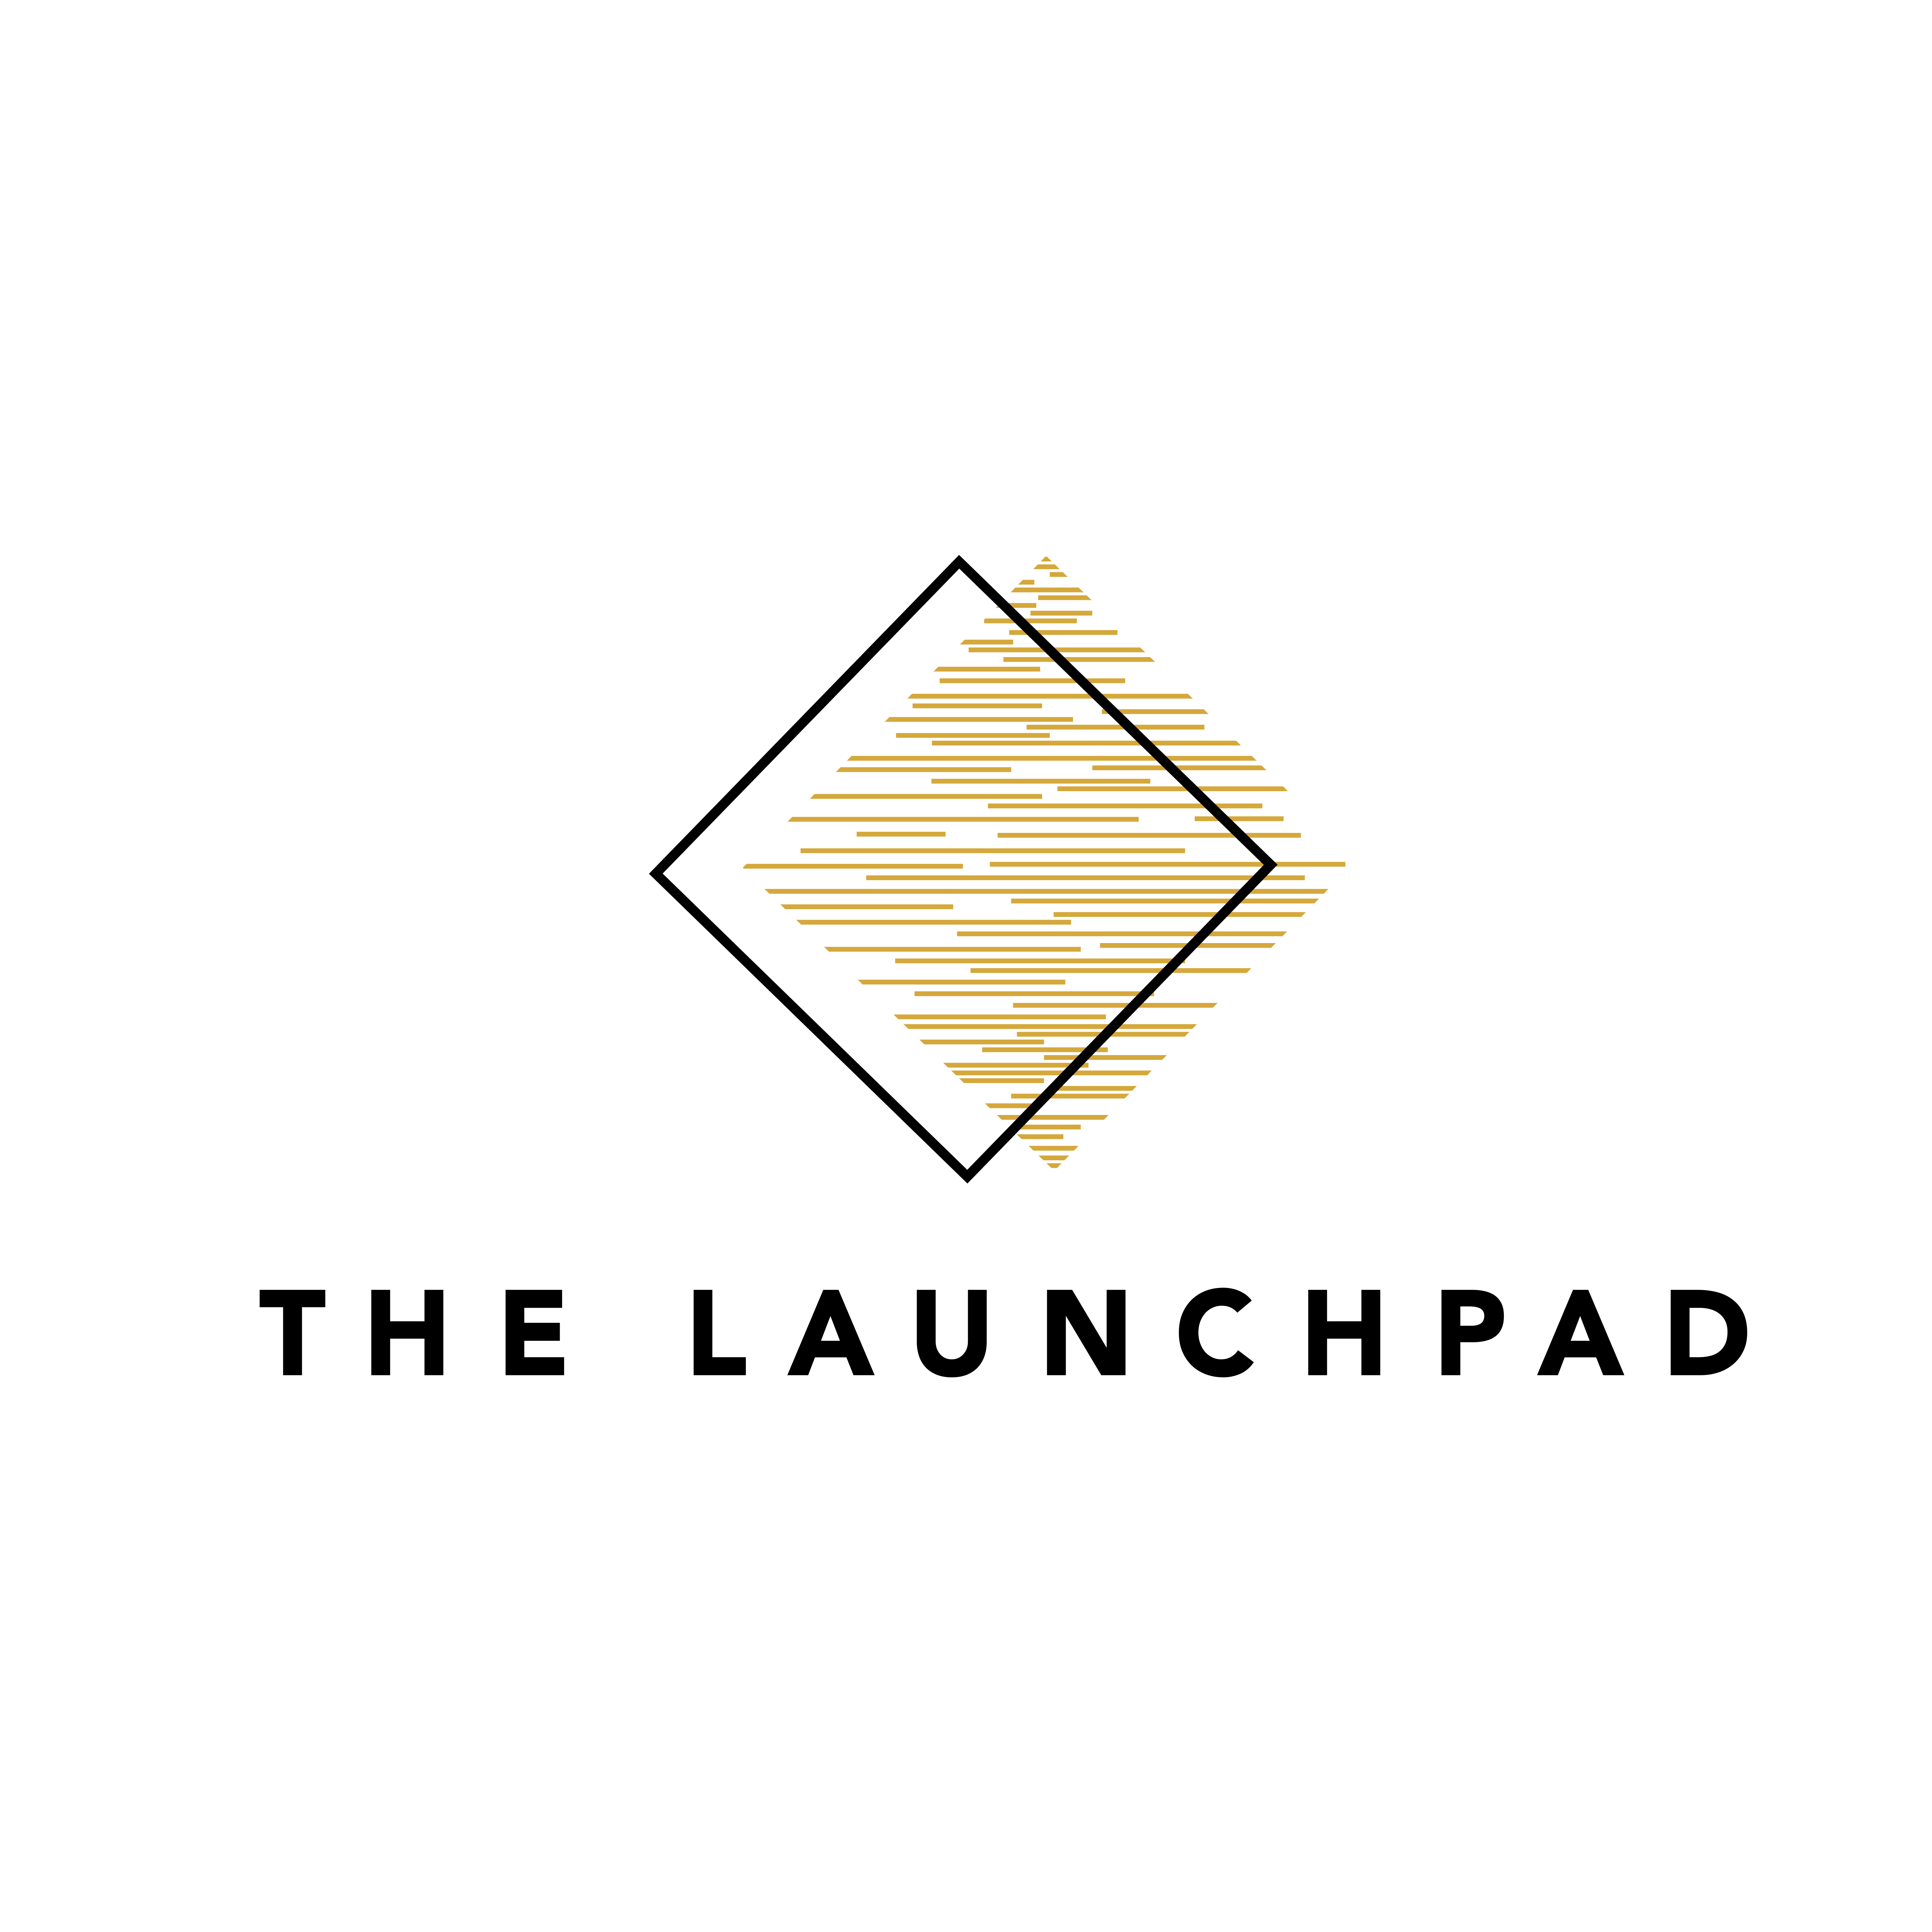 The Launchpad logo